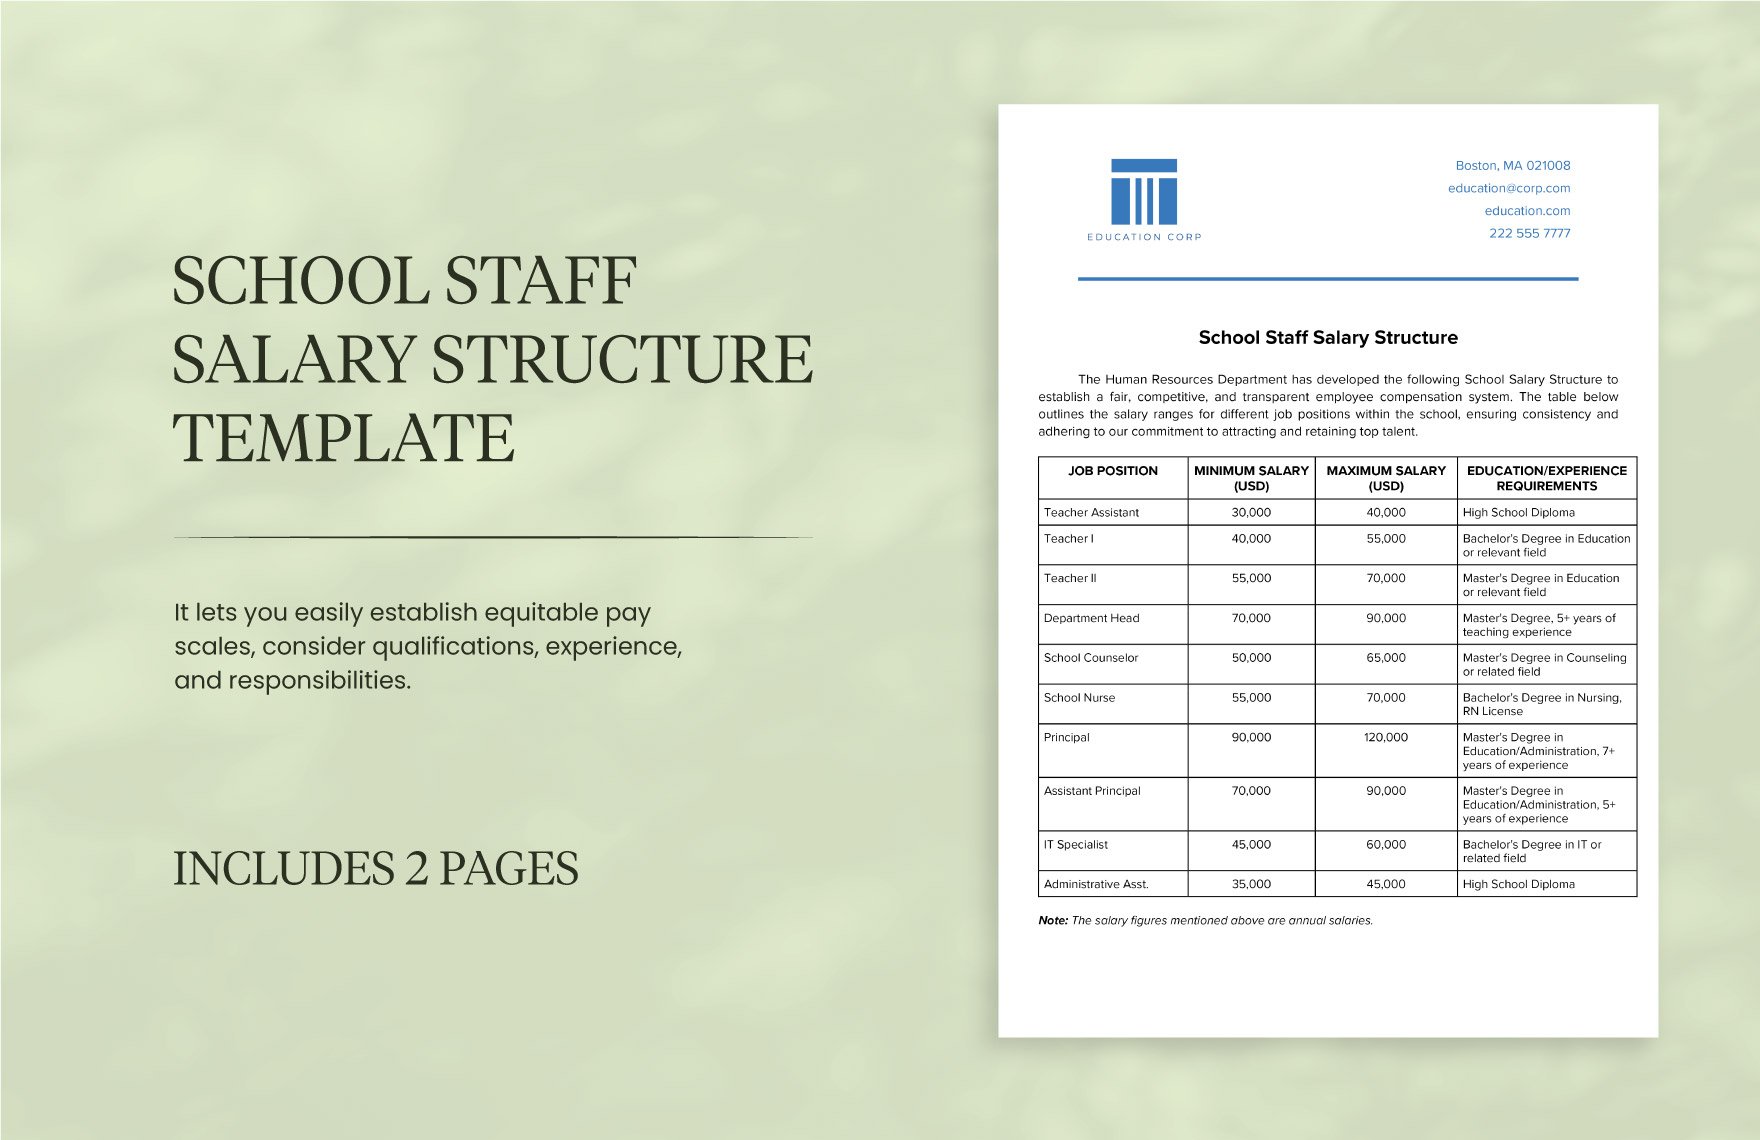 School Staff Salary Structure Template